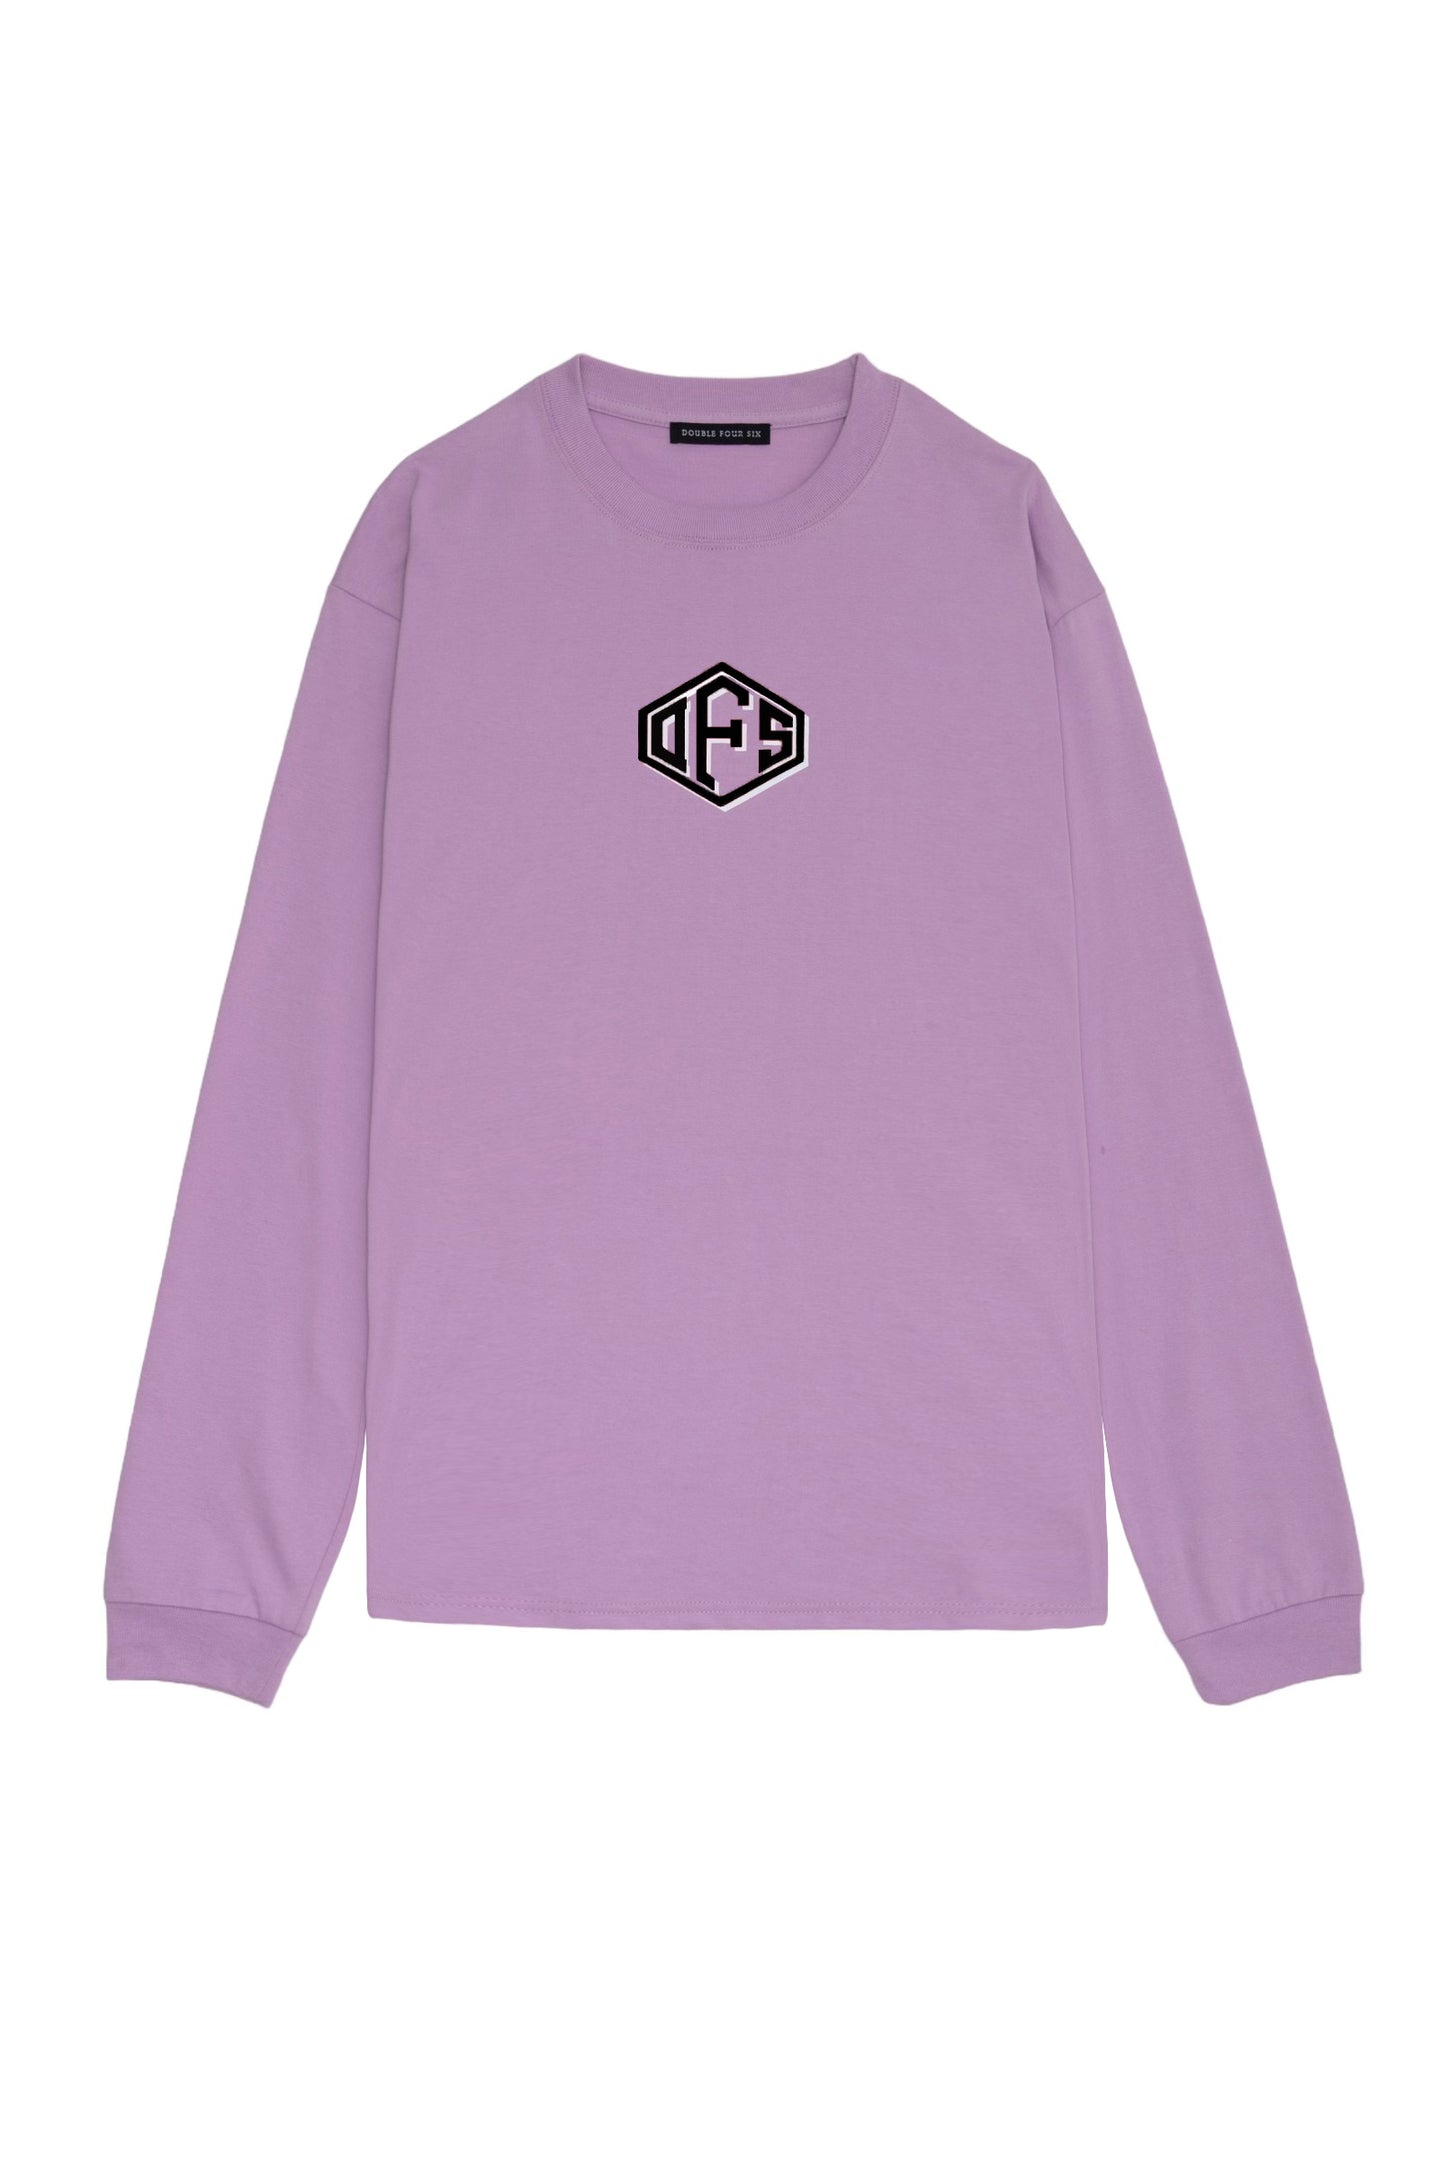 DFS-logo Long Sleeve T-shirt Lavender